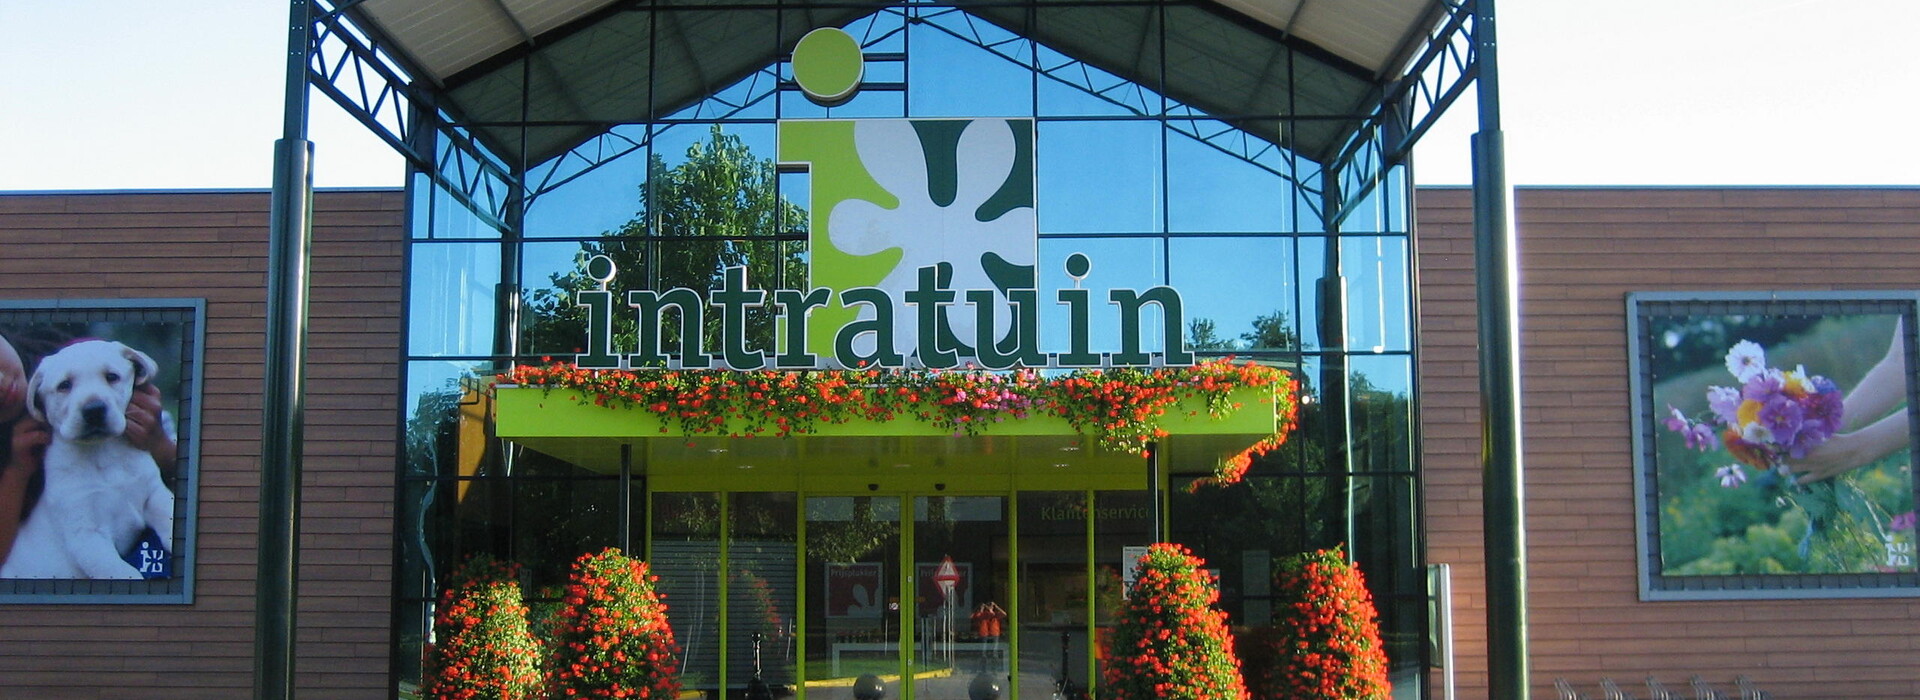 Rebuild Intratuin, Amersfoort (the Netherlands) 2005